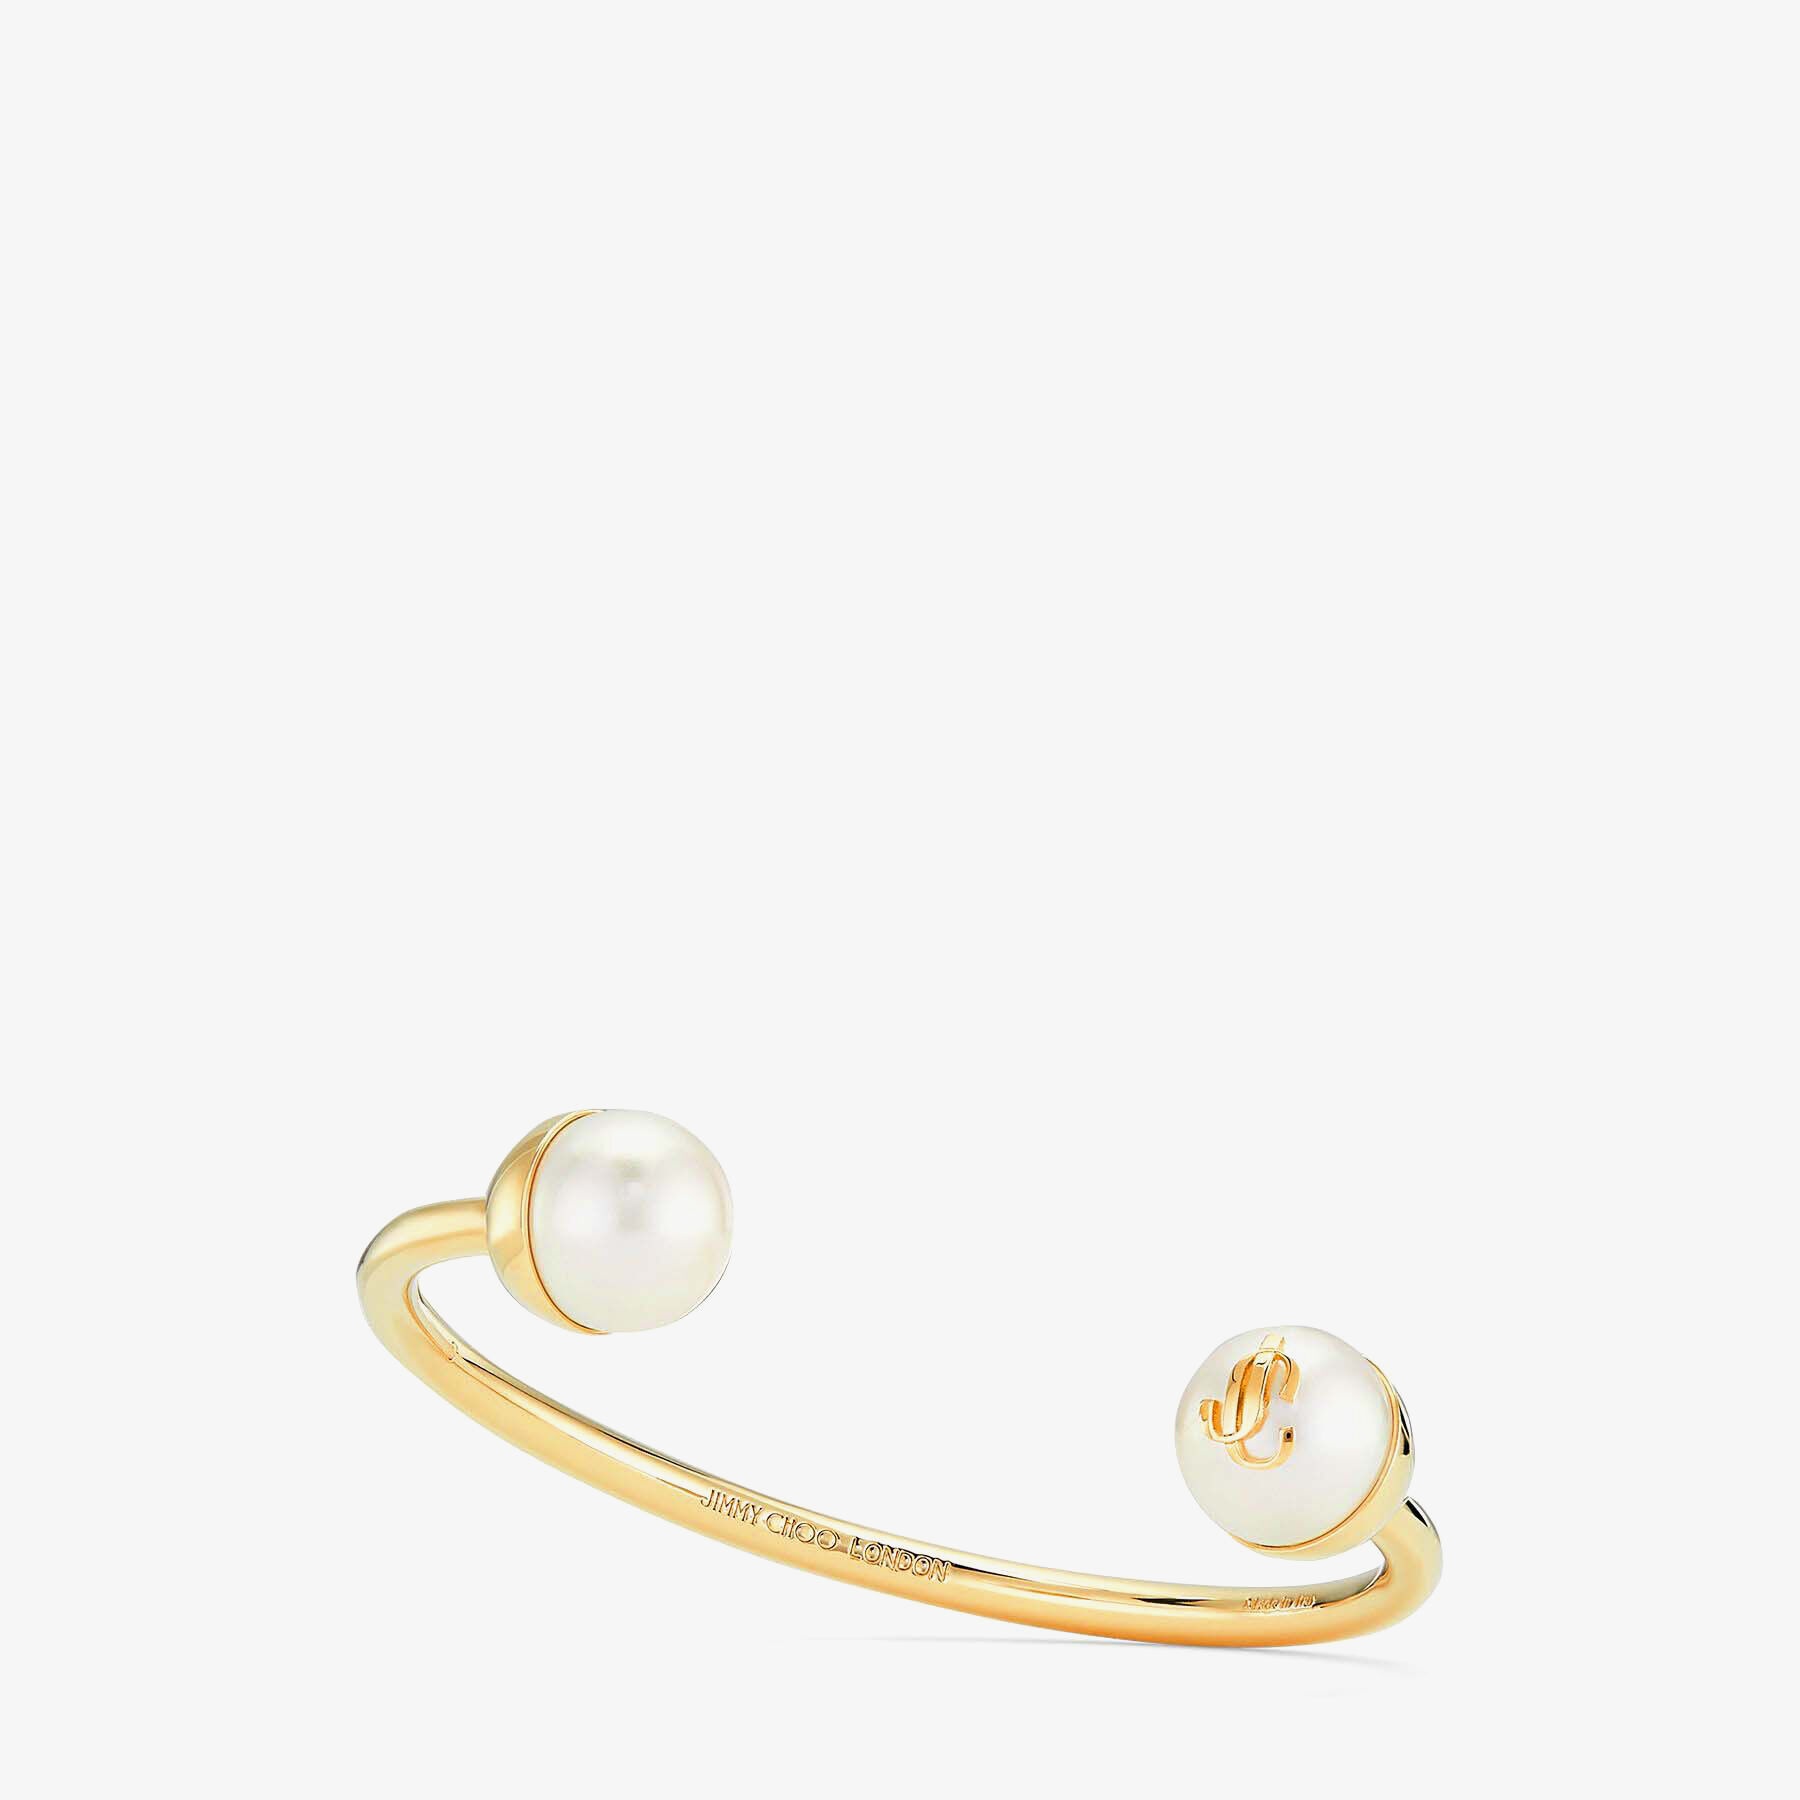 JC Pearl Cuff
Gold-Finish Metal Cuff Bracelet with Pearls - 5